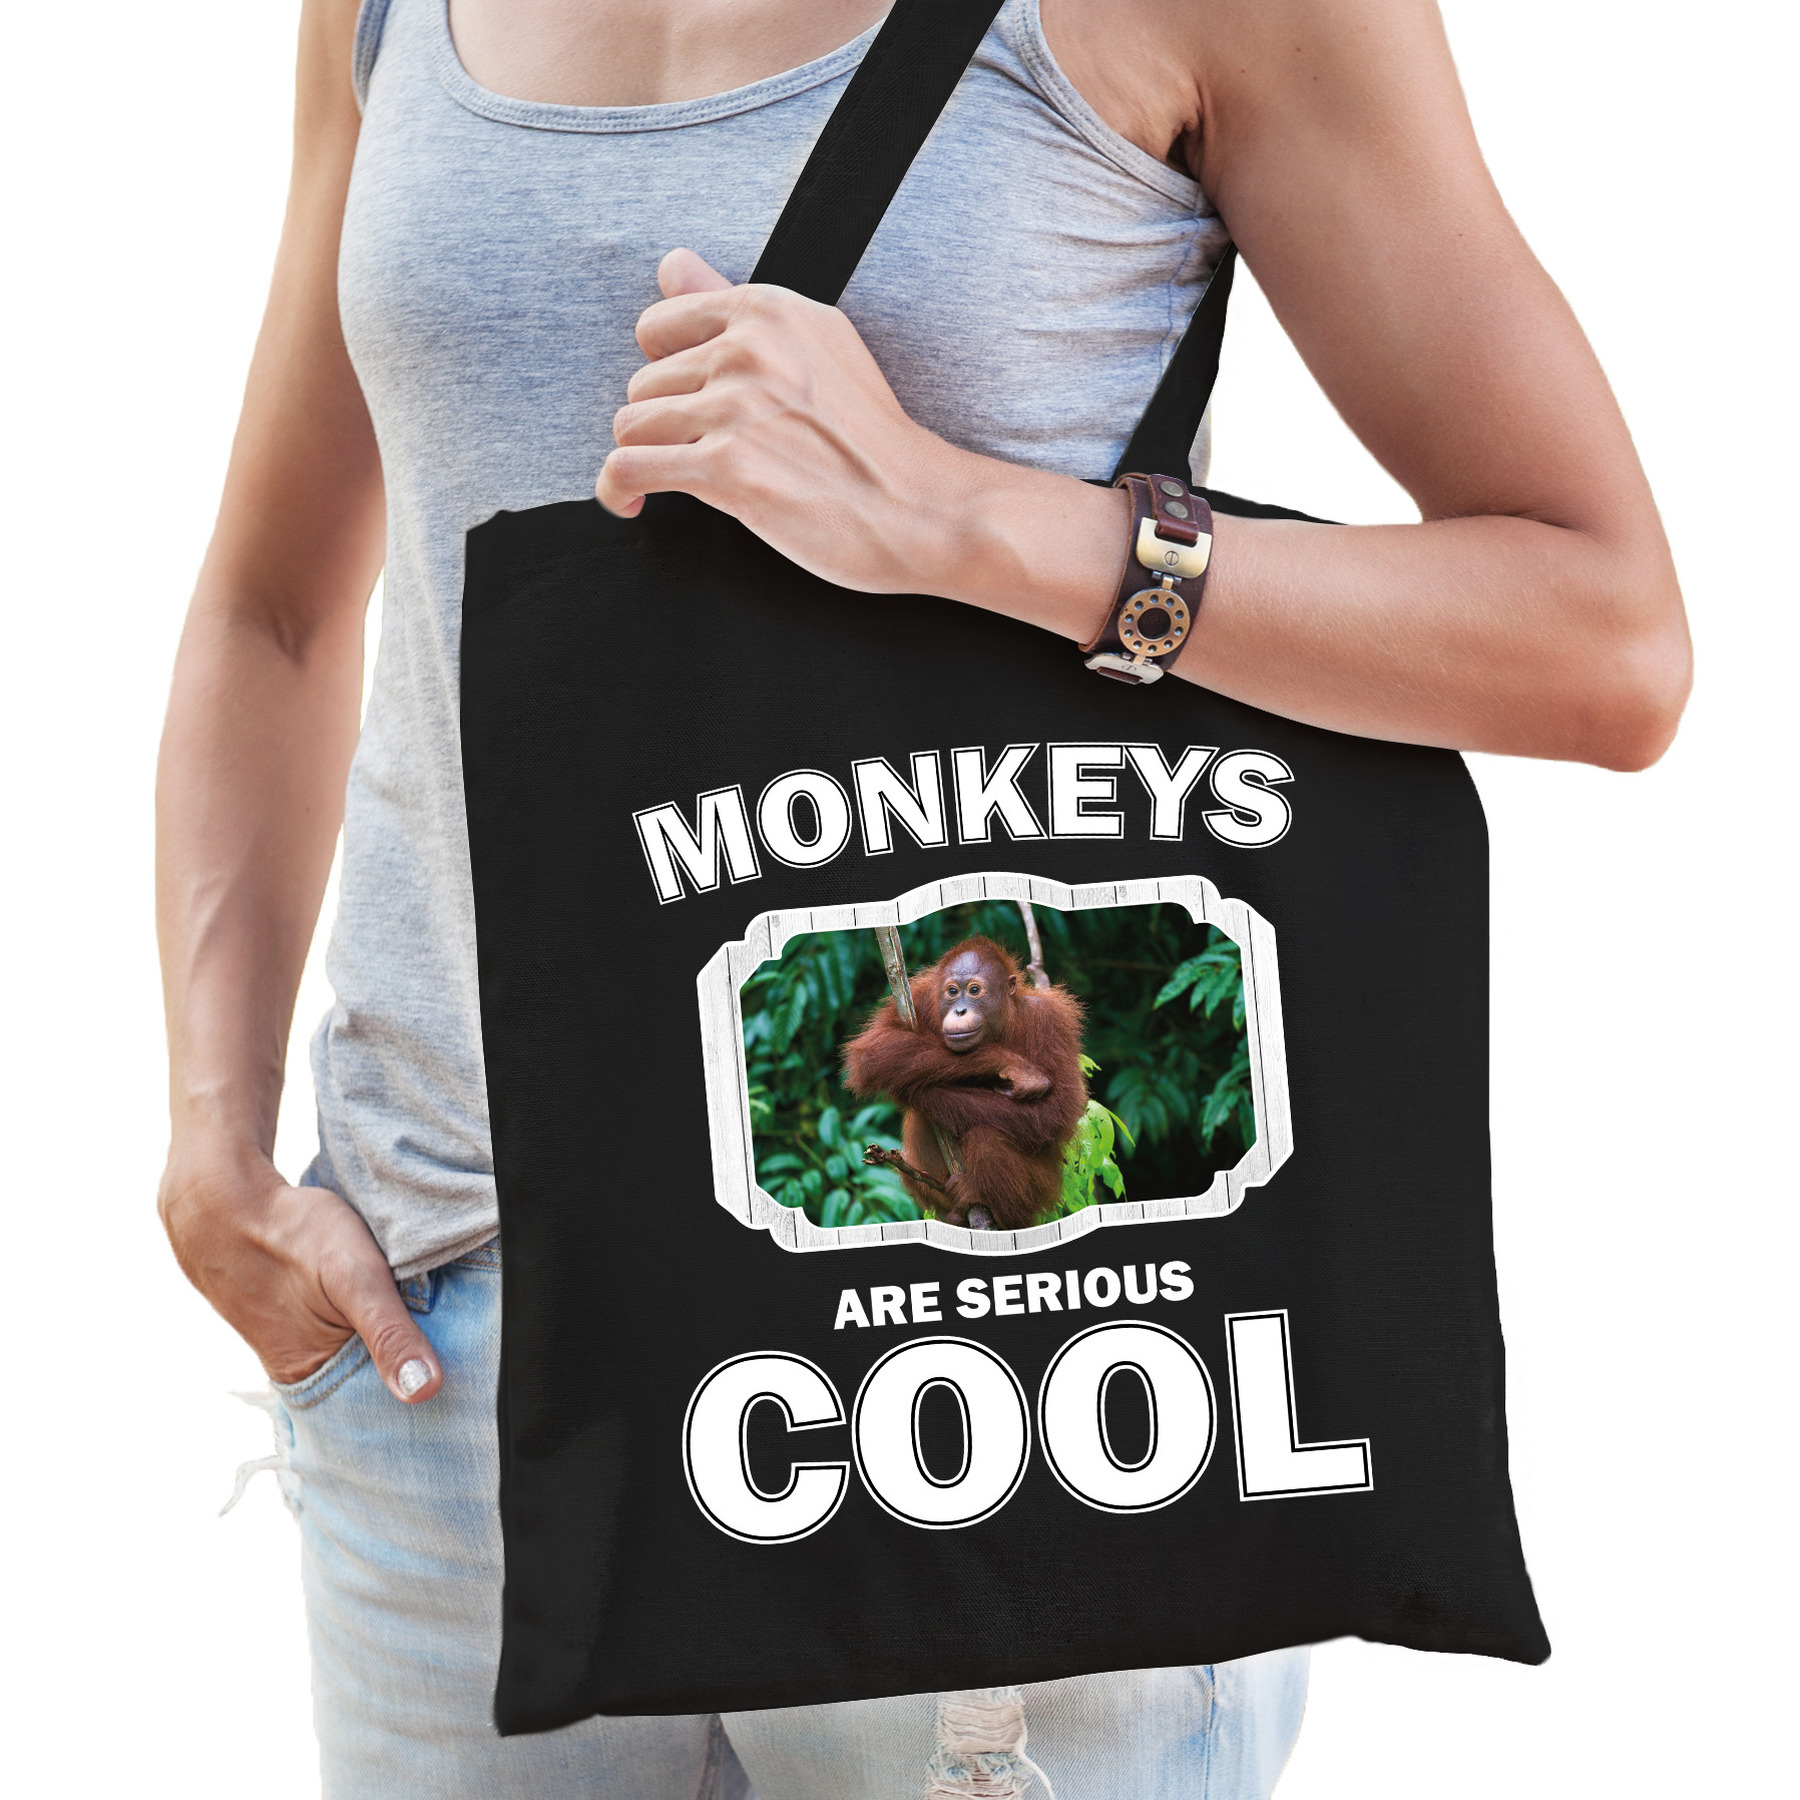 Katoenen tasje monkeys are serious cool zwart - Apen/ orangoetan cadeau tas